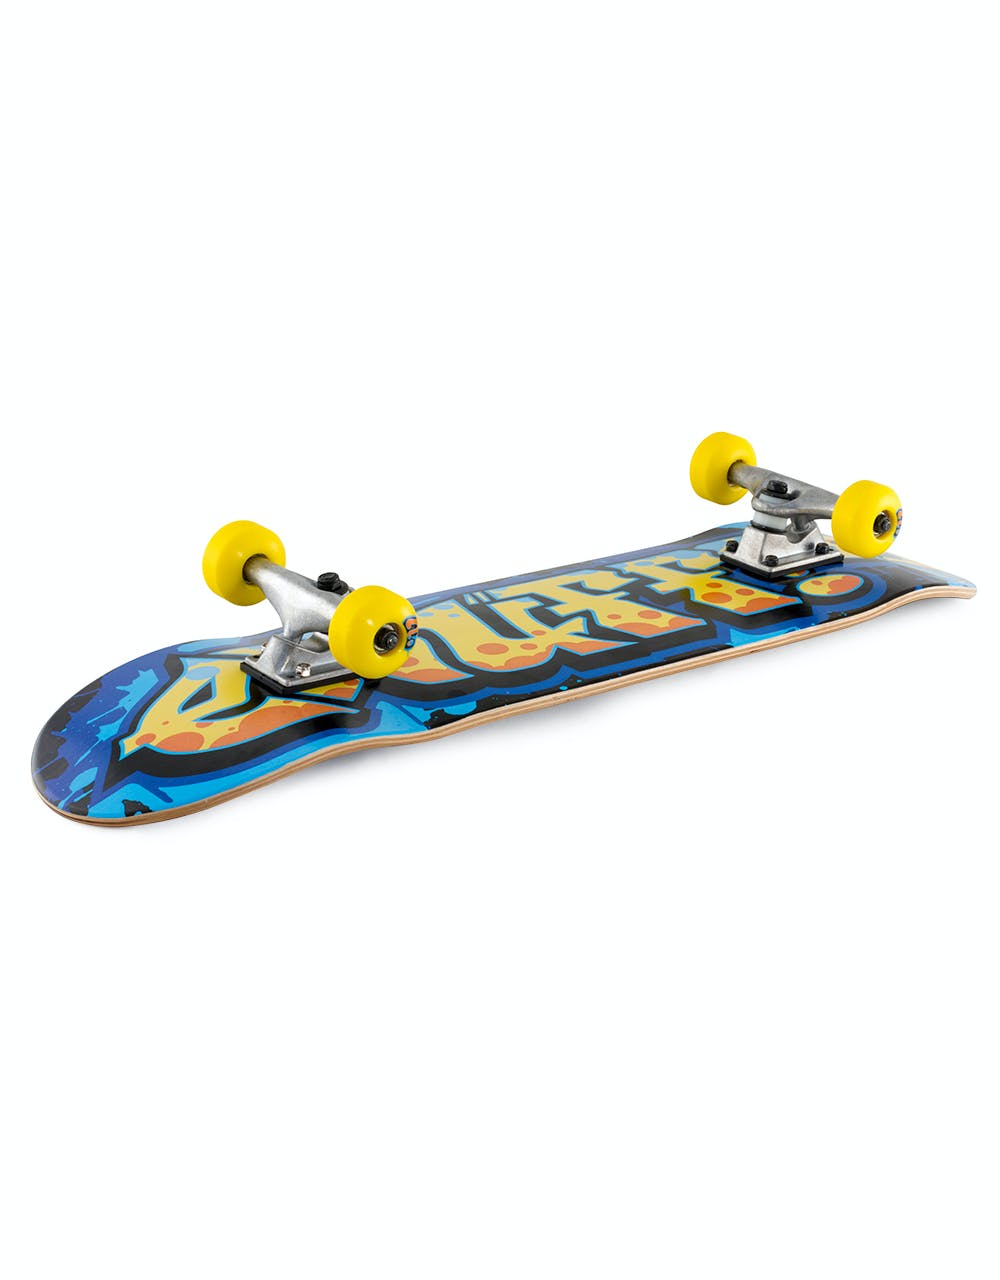 Enuff Graffiti II Mini Complete Skateboard - 7.25"